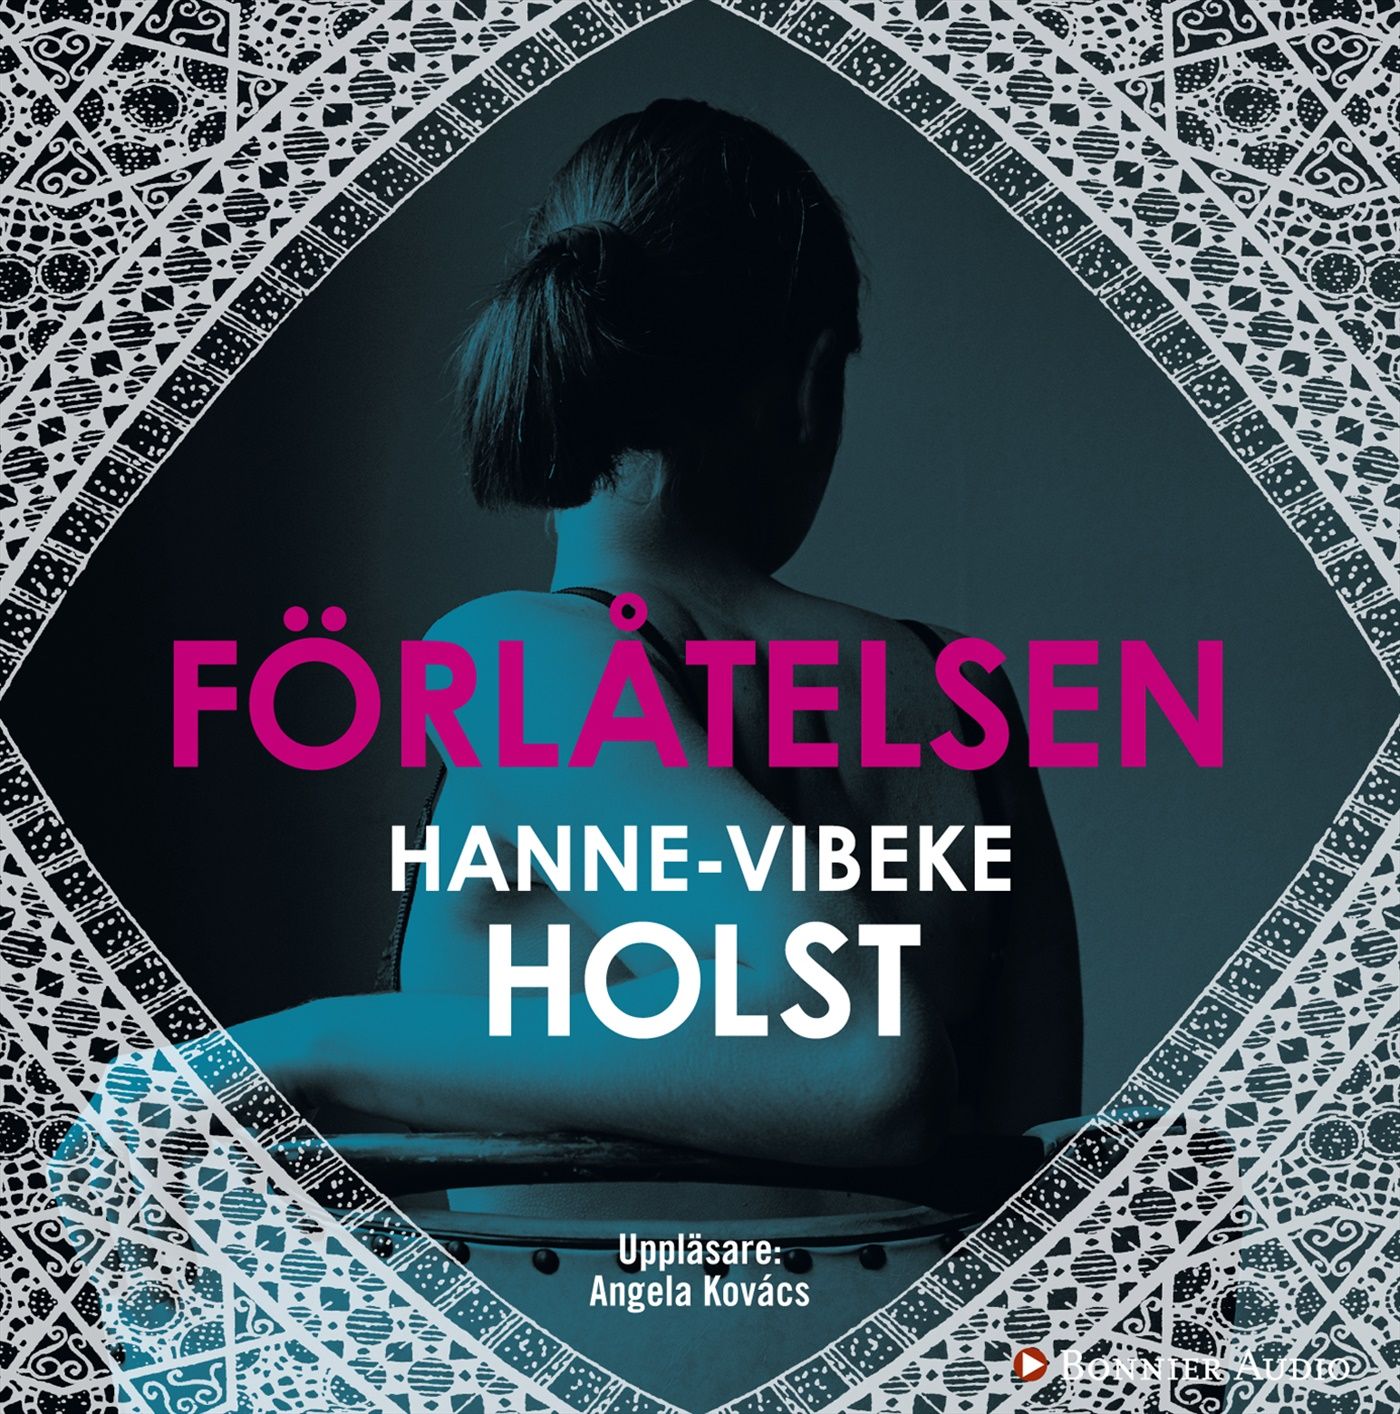 Förlåtelsen, audiobook by Hanne-Vibeke Holst